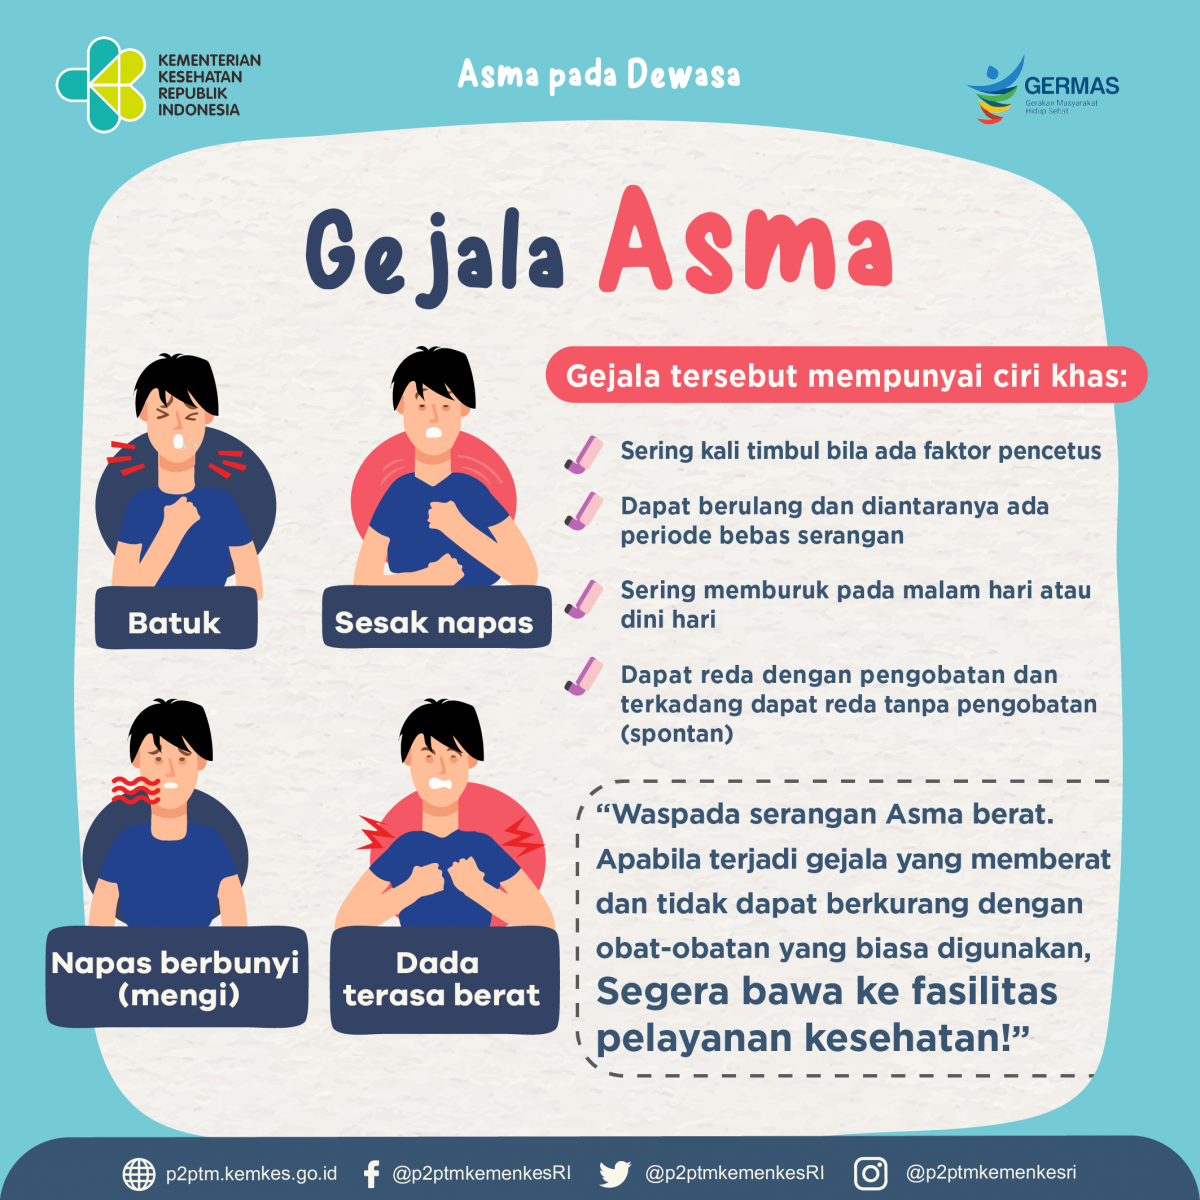 Simak yuk apa saja gejala Asma.